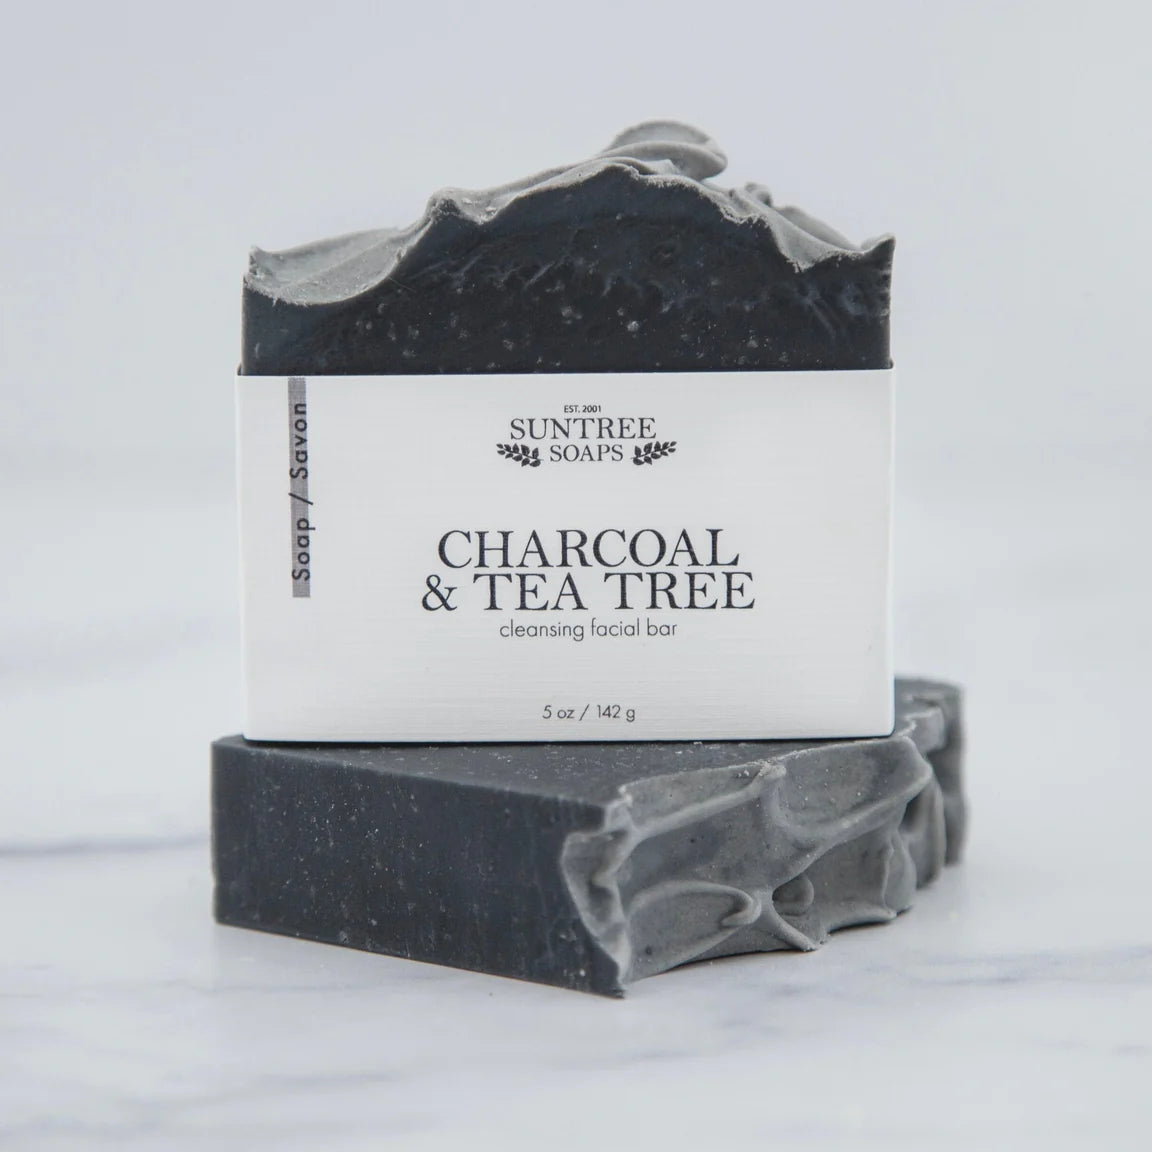 Charcoal & Tea Tree Facial Bar